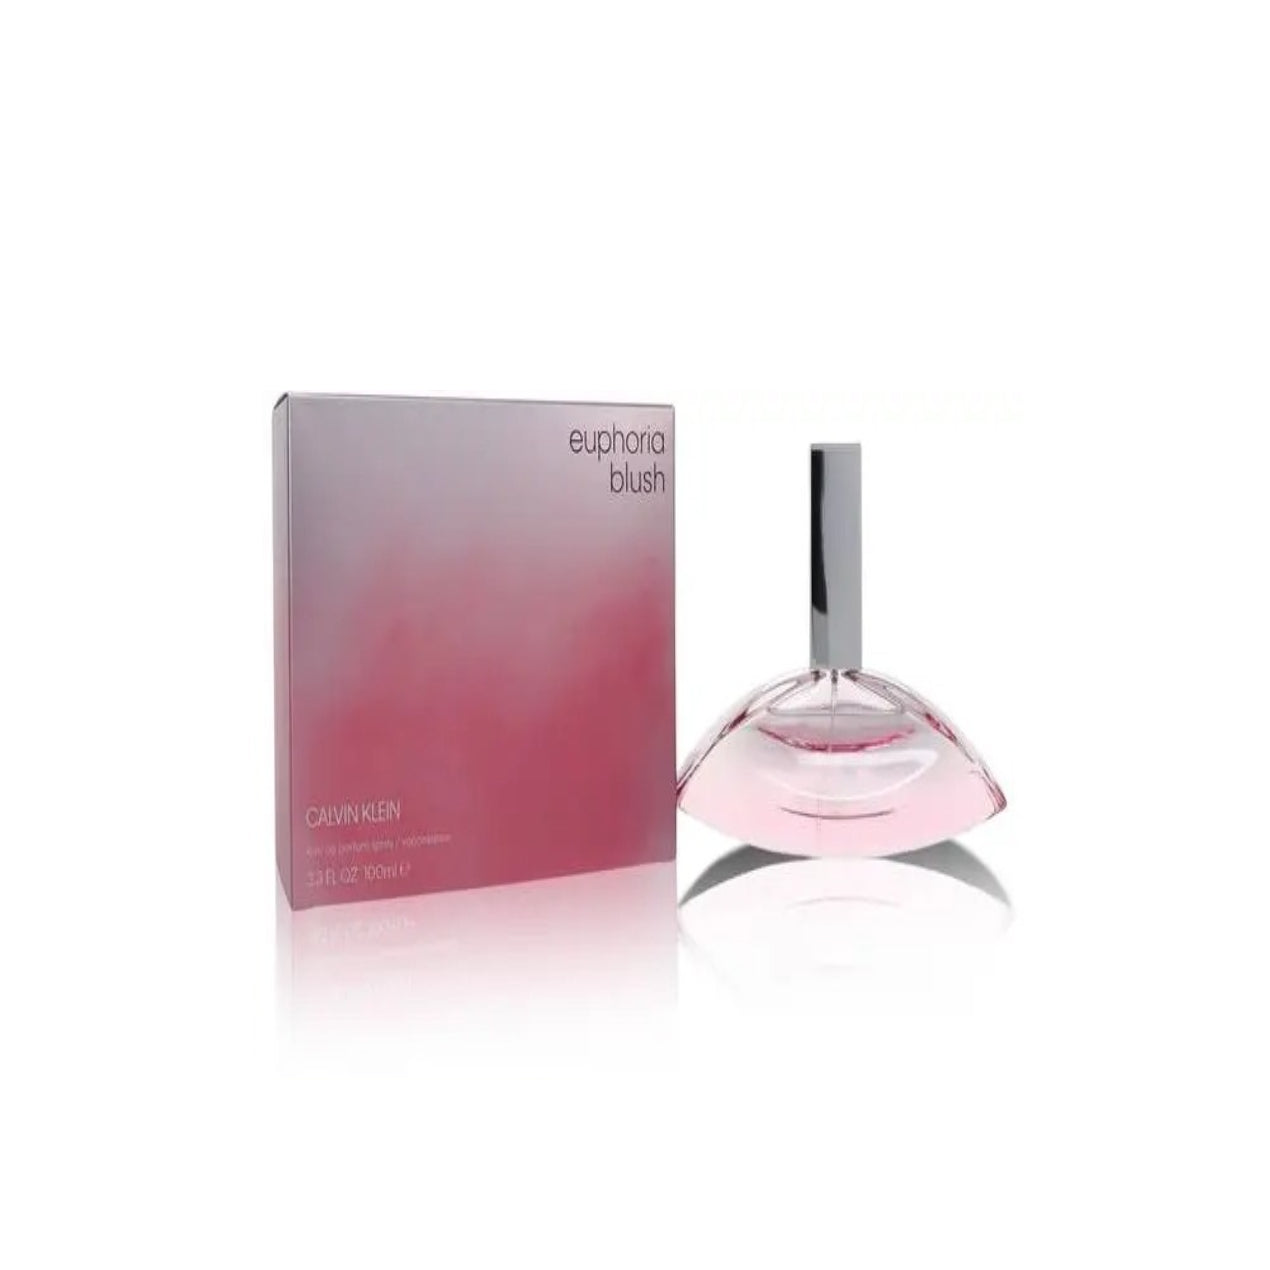 Euphoria Blush Perfume for Women